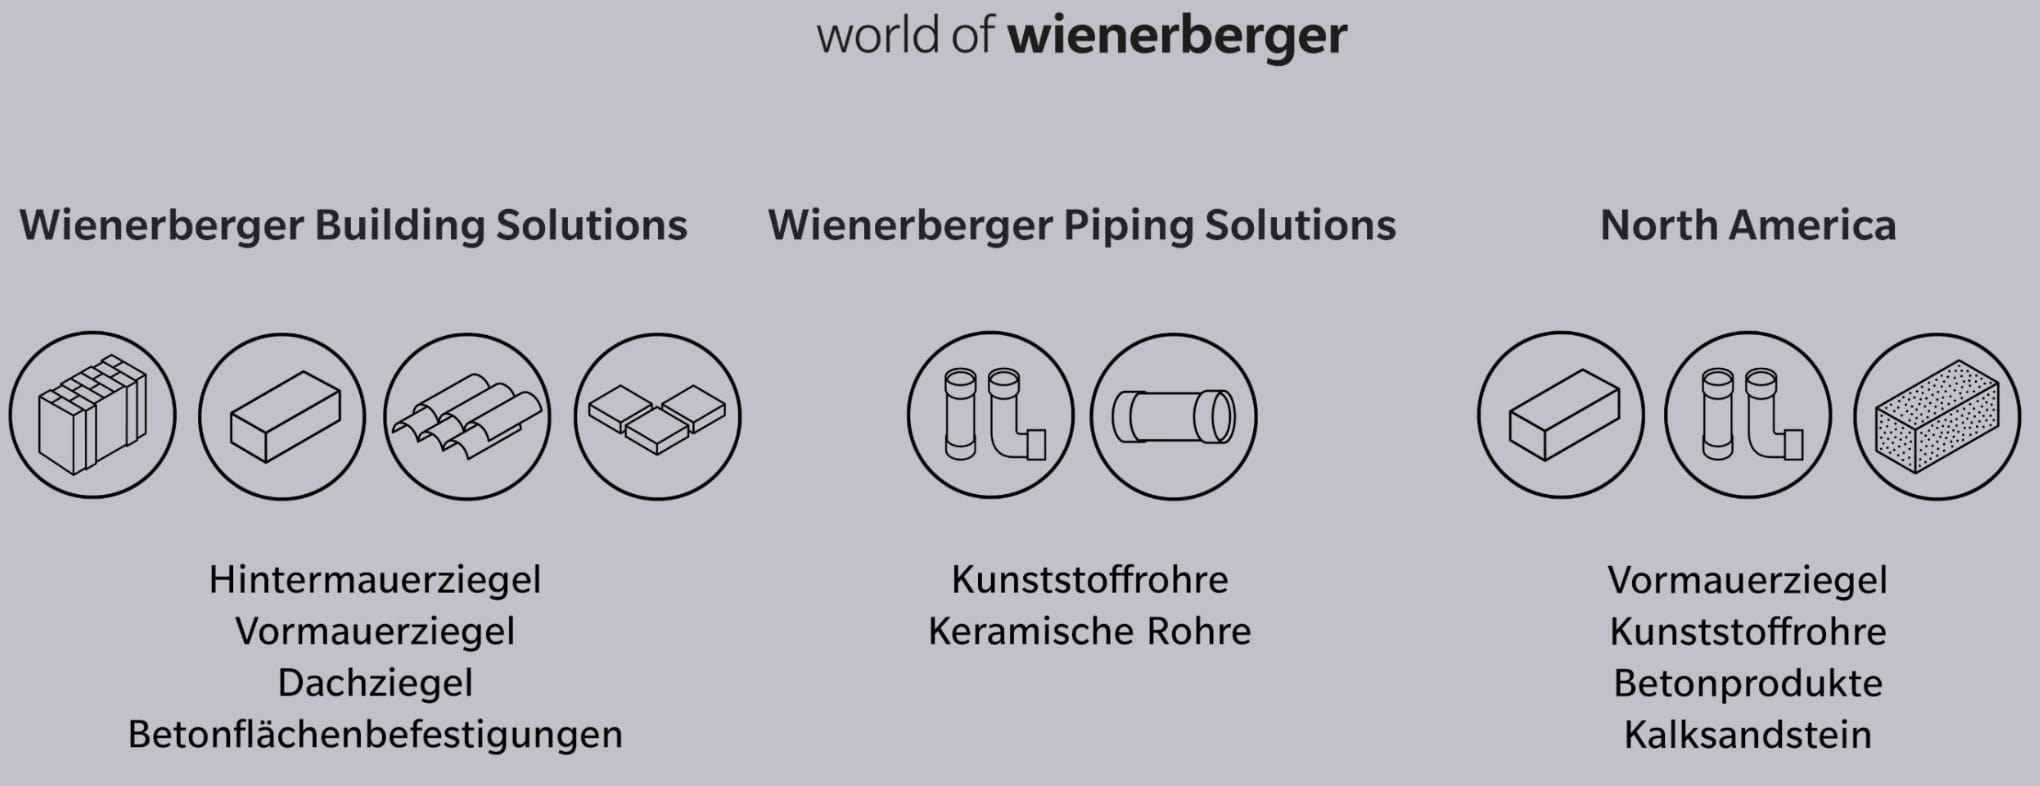 Wienerberger Corporate Website